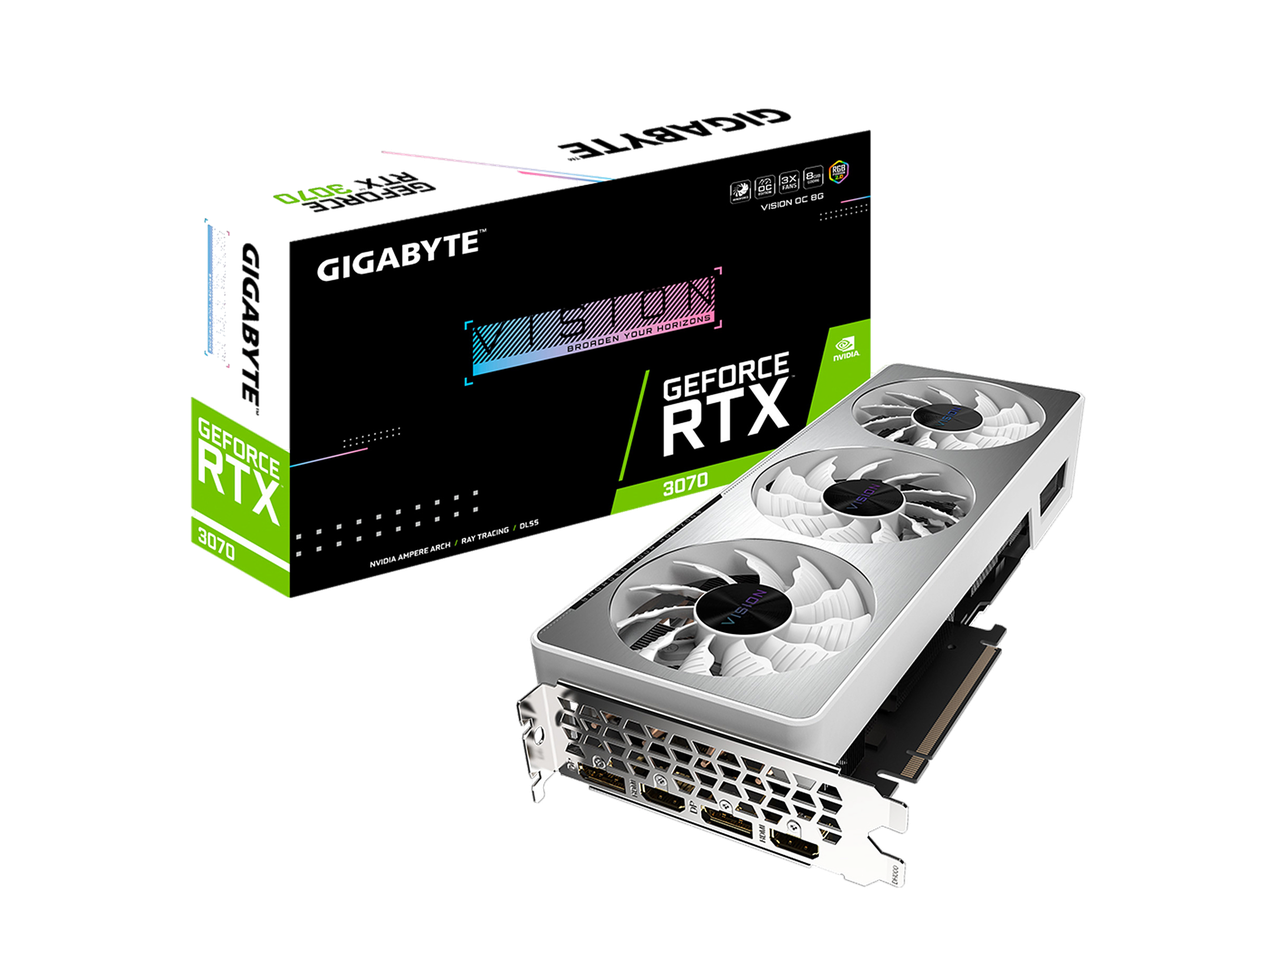 GIGABYTE Vision OC GeForce RTX 3070 8GB GDDR6 PCI Express 4.0 ATX Video Card GV-N3070VISION OC-8GD (rev. 2.0) (LHR)